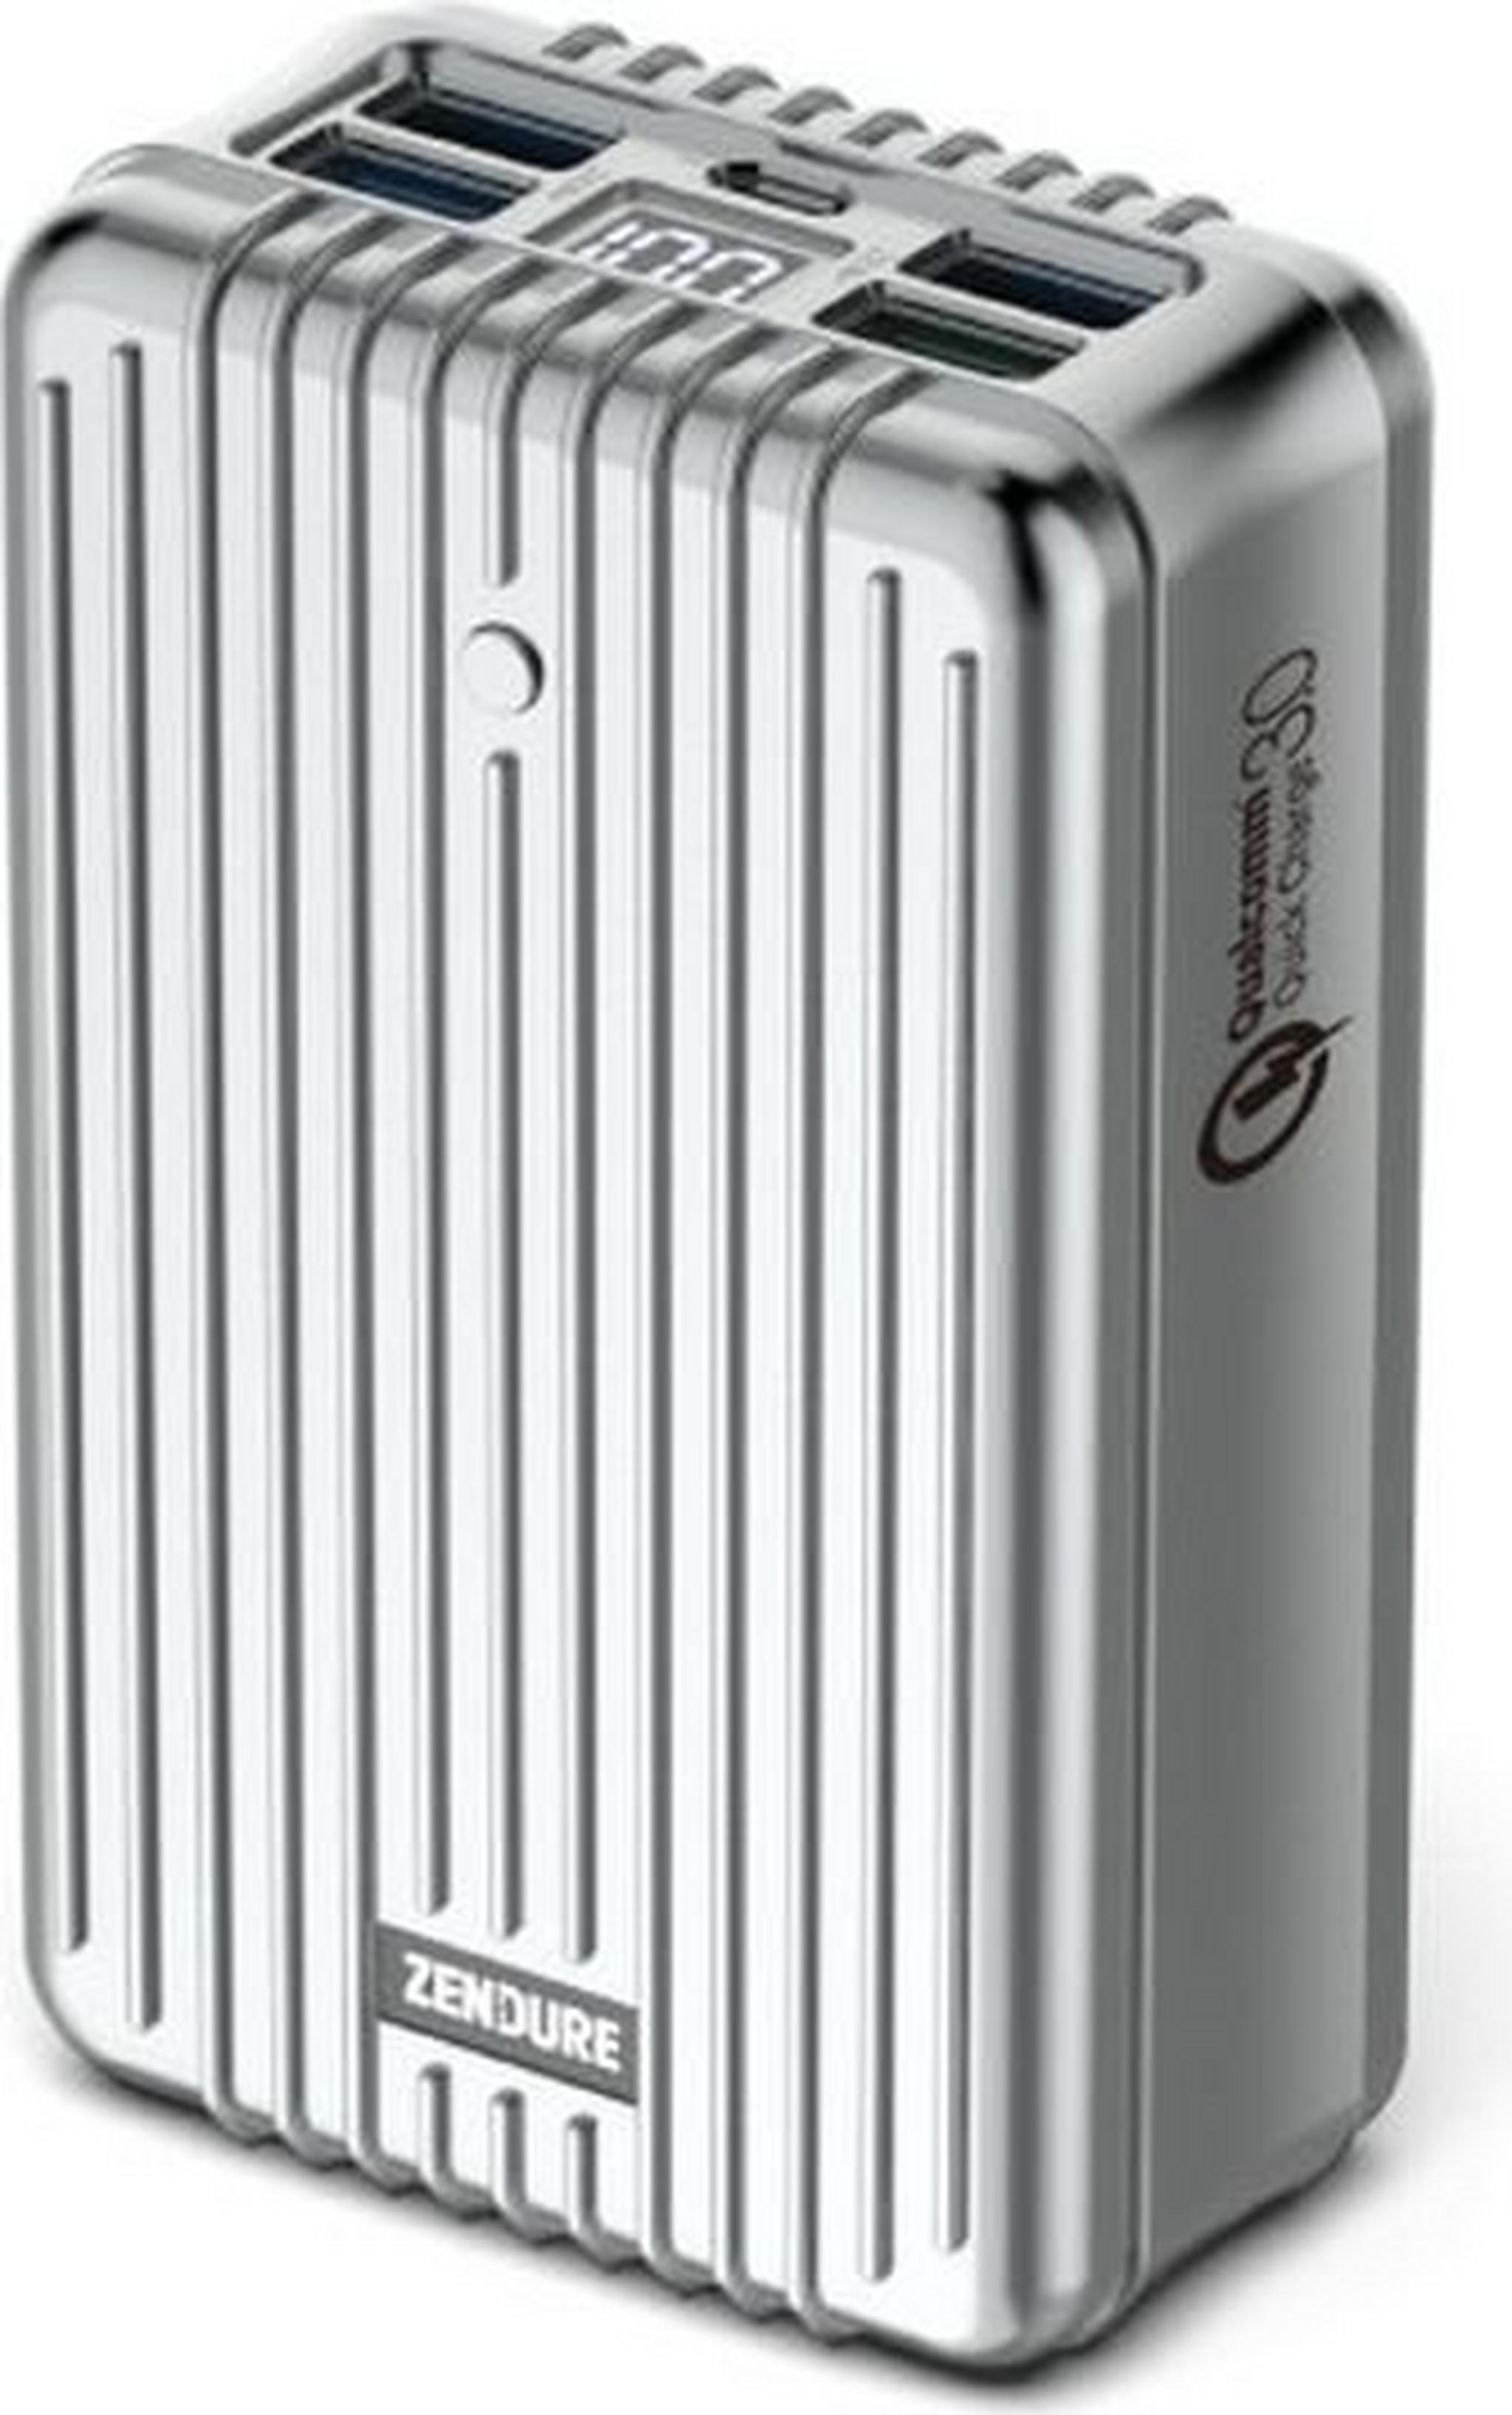 Zendure A8 Portable Power Bank 26,800 mAh - Silver